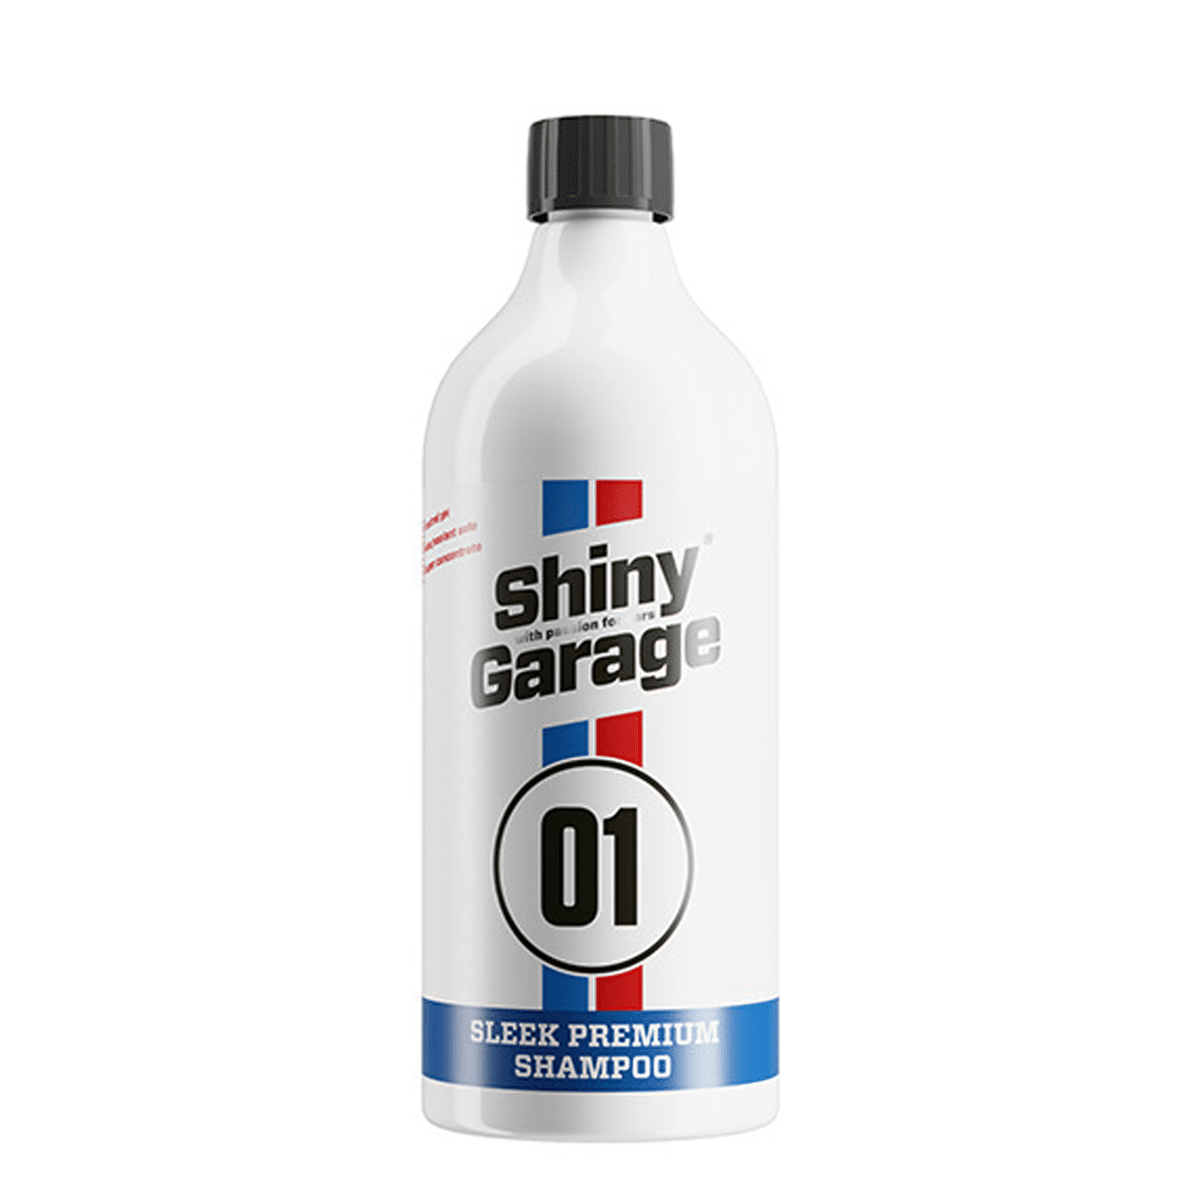 SHINY GARAGE Sleek Premium Shampoo 1l Szampon Samochodowy Neutralne pH